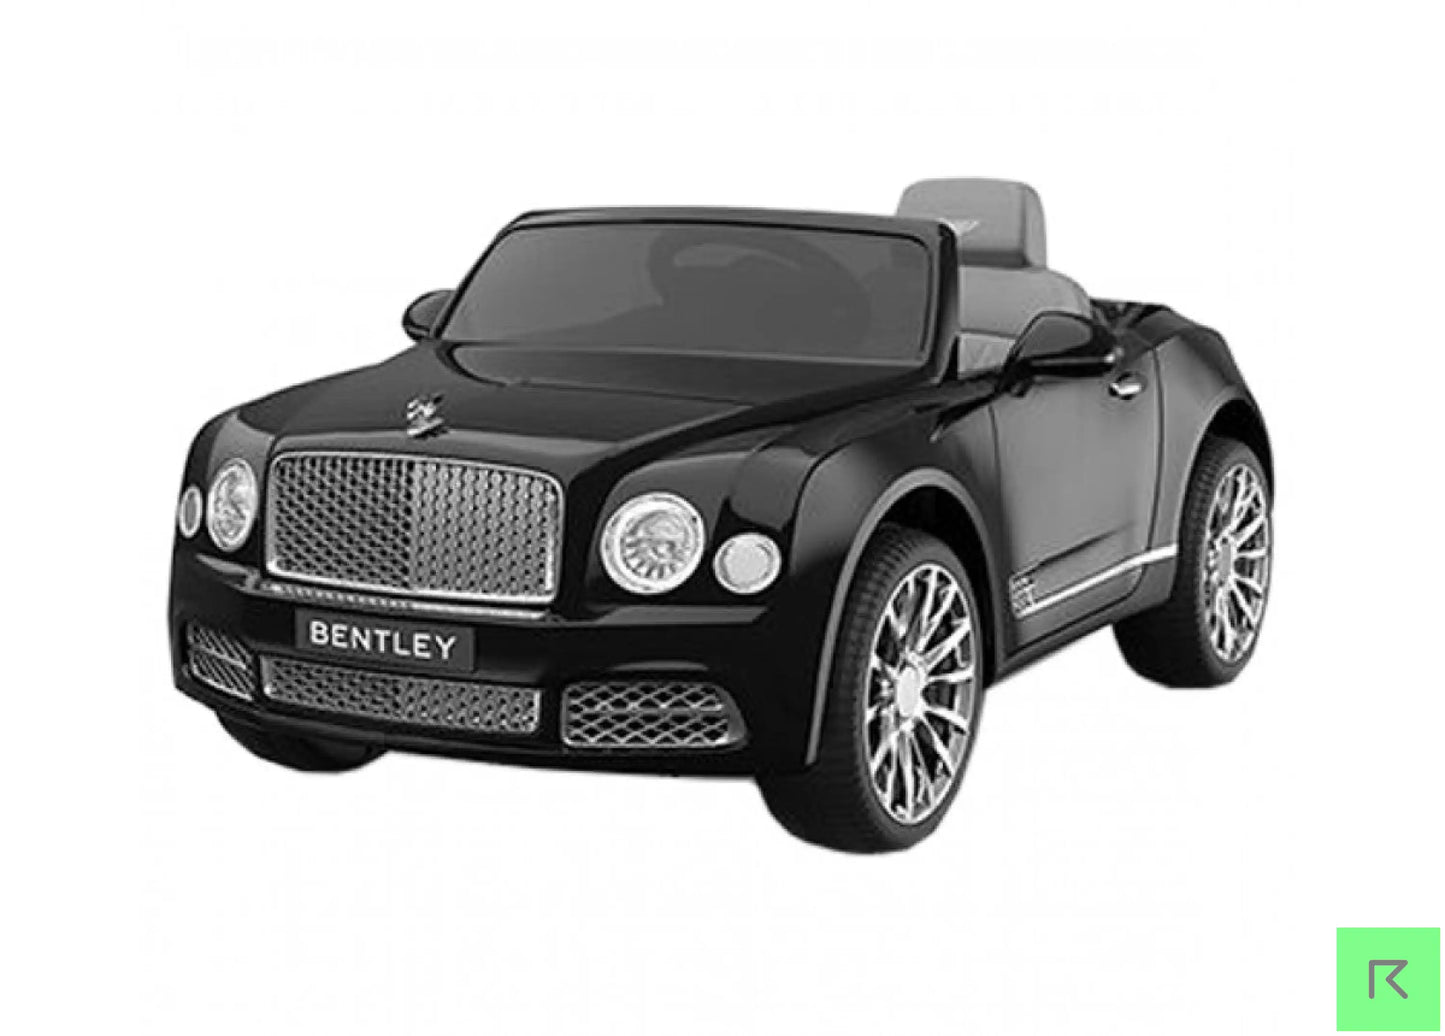 Bentley Mulsanne 12V Kids Black Electric Ride On Car - KIDS RIDE ON ELECTRIC CAR